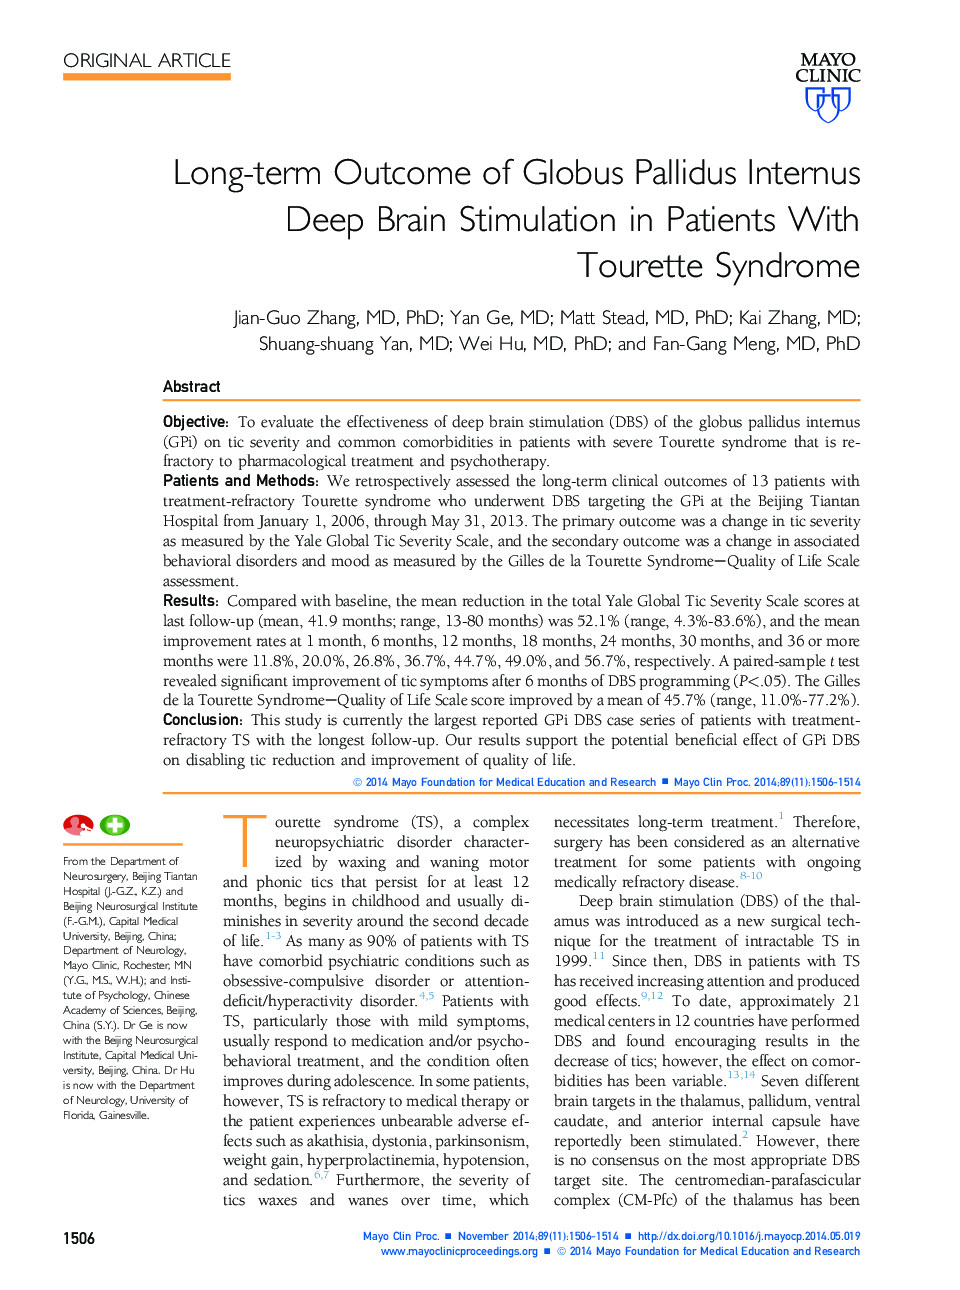 Long-term Outcome of Globus Pallidus Internus Deep Brain Stimulation in Patients With Tourette Syndrome